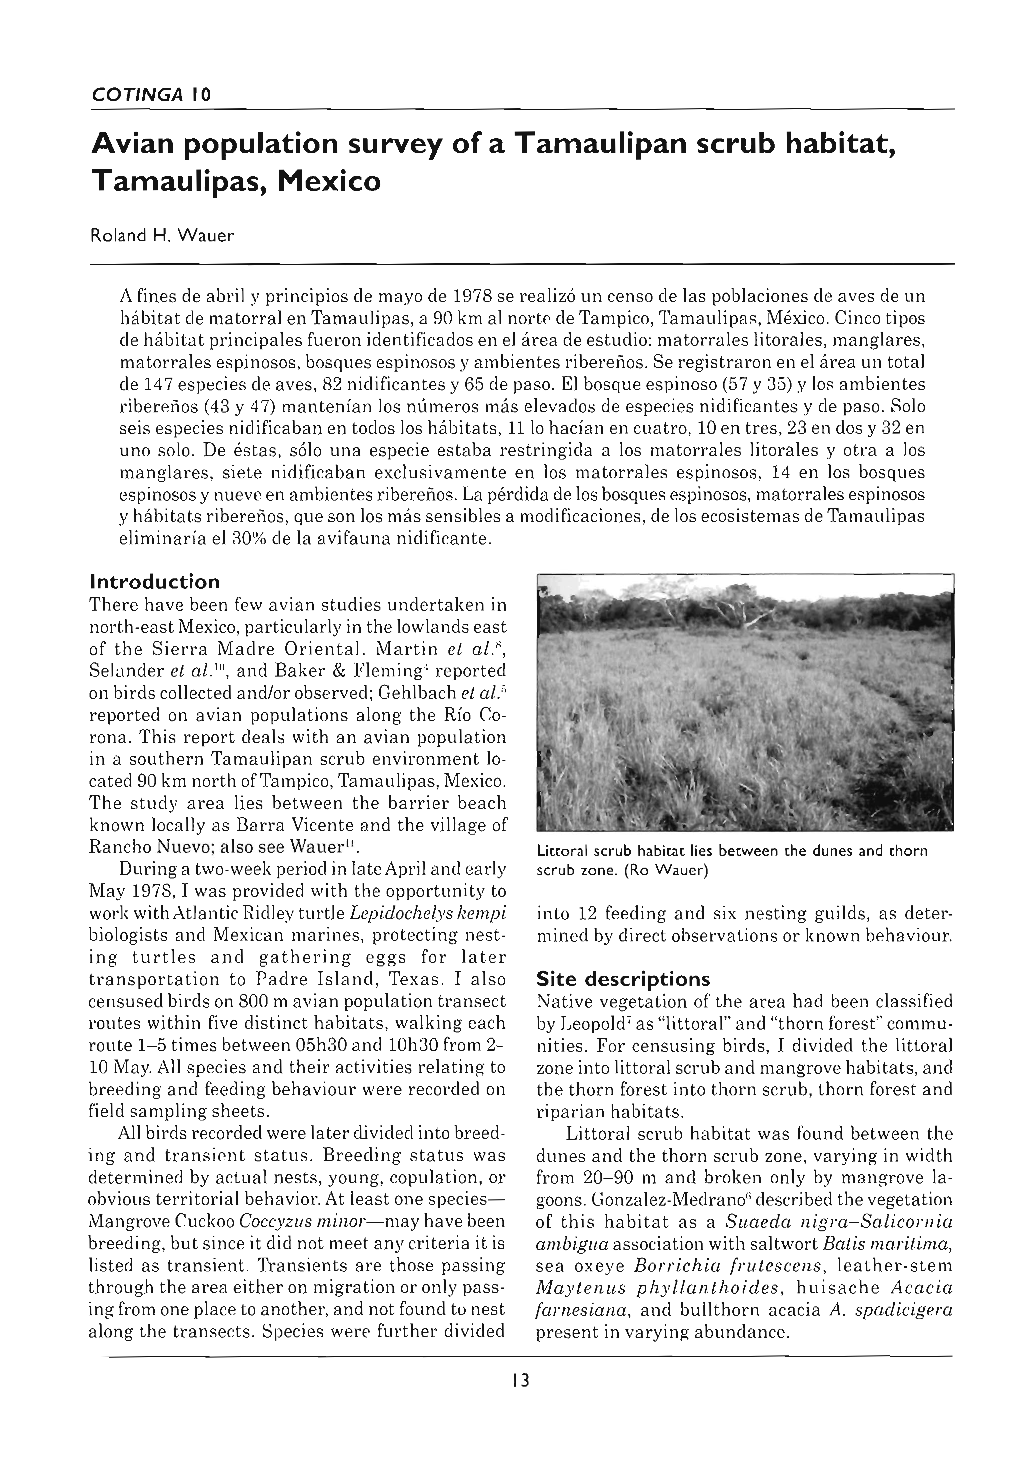 Avian Population Survey of a Tamaulipan Scrub Habitat, Tamaulipas, Mexico